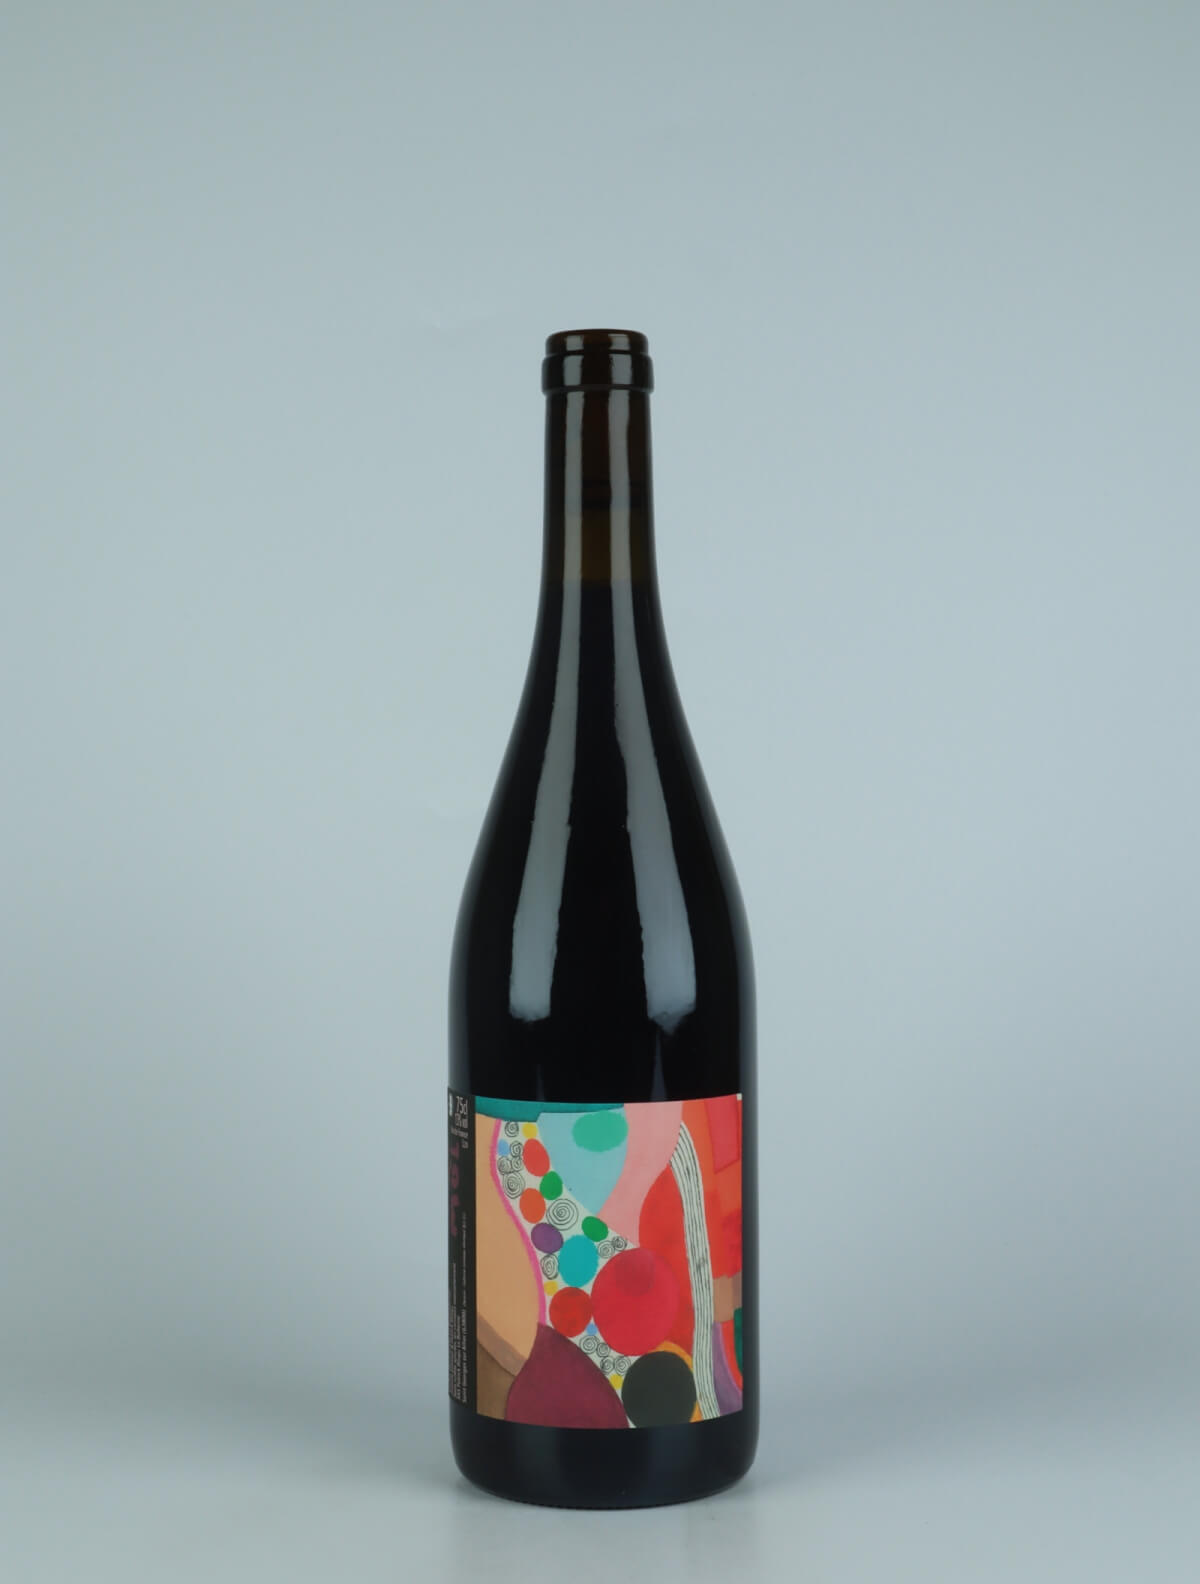 A bottle 2020 Môl Red wine from Patrick Bouju, Auvergne in France